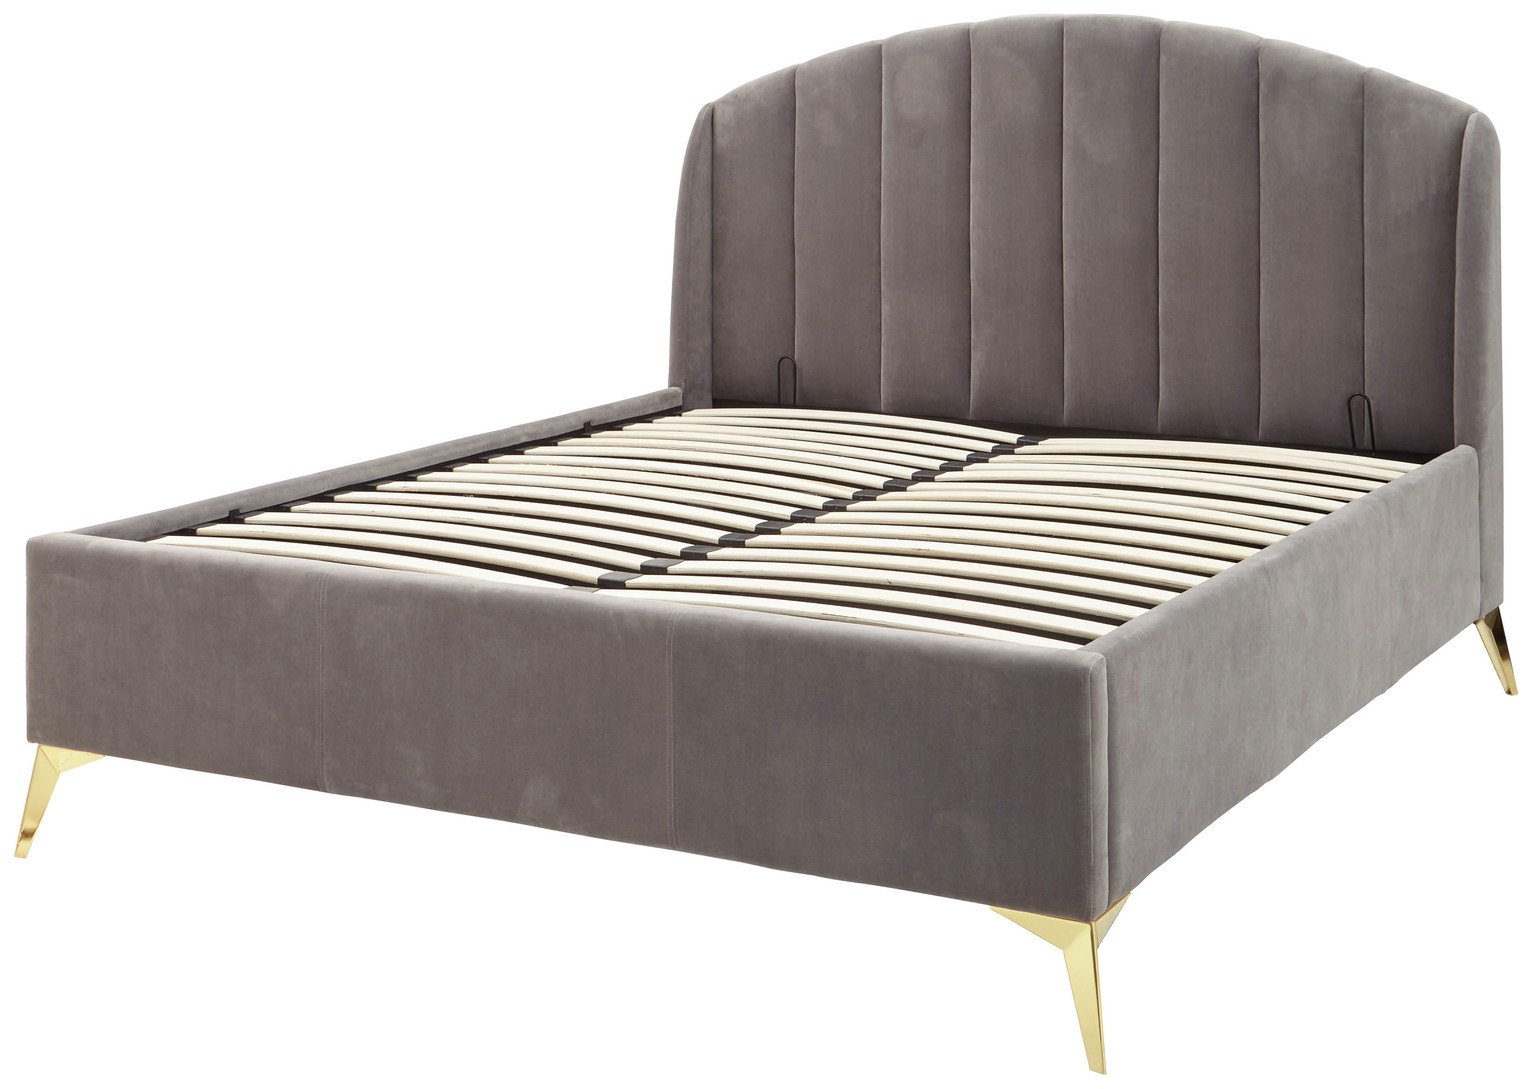 GFW Pettine Kingsize End Lift Ottoman Fabric Bed Frame-Grey